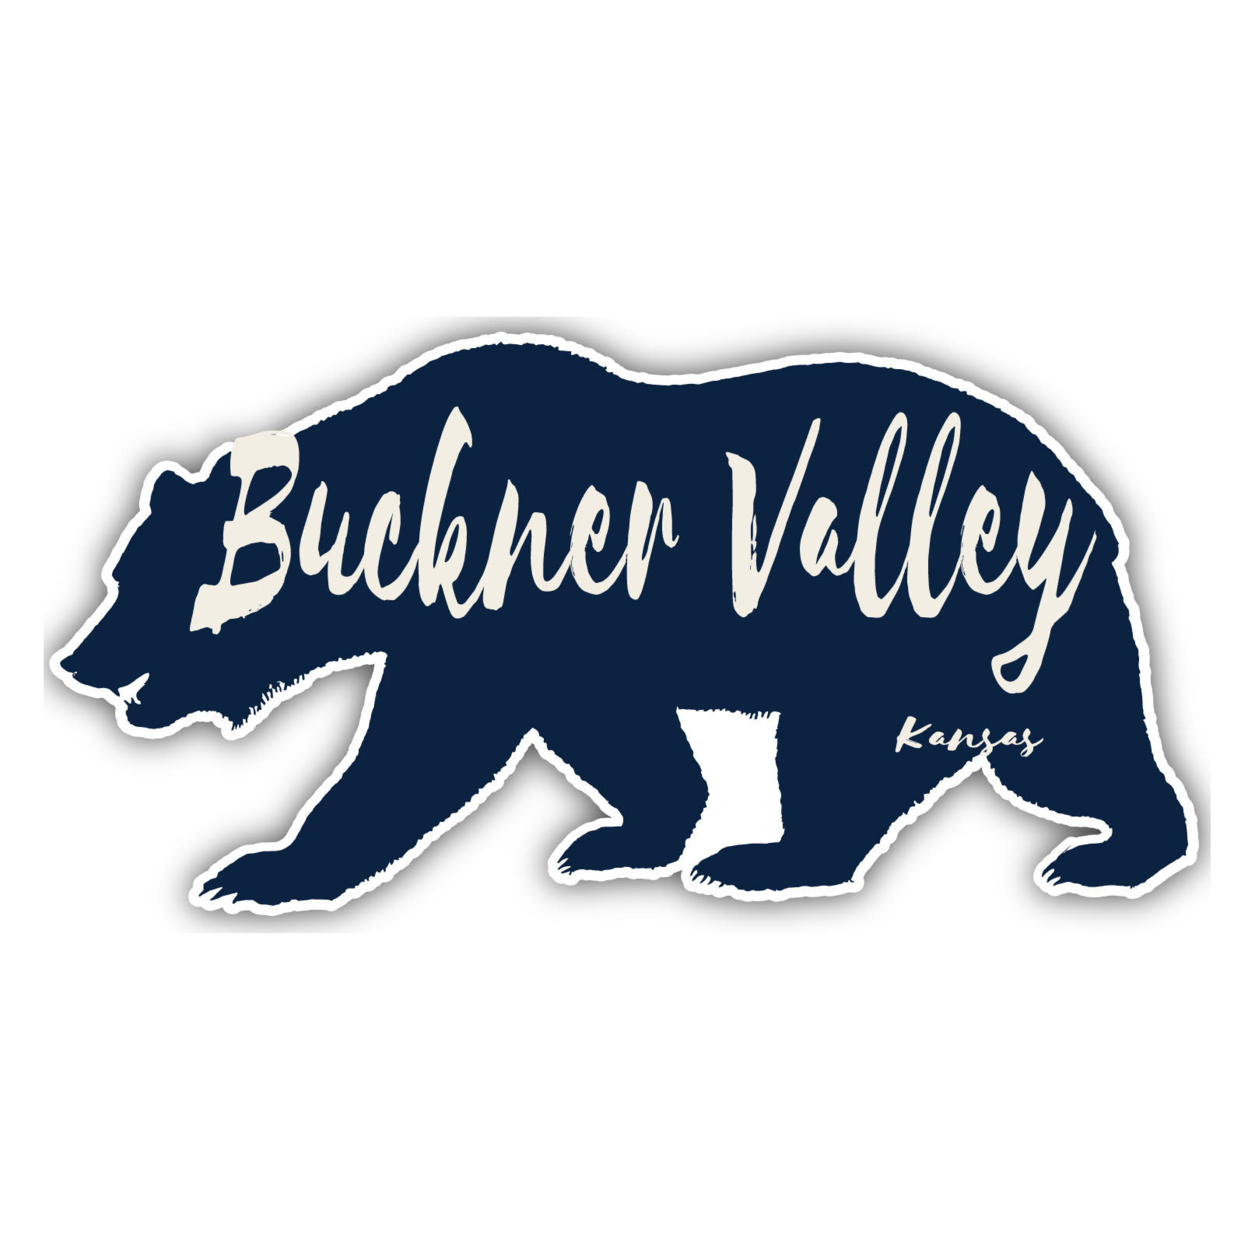 Buckner Valley Kansas Souvenir Decorative Stickers (Choose Theme And Size) - Single Unit, 12-Inch, Bear